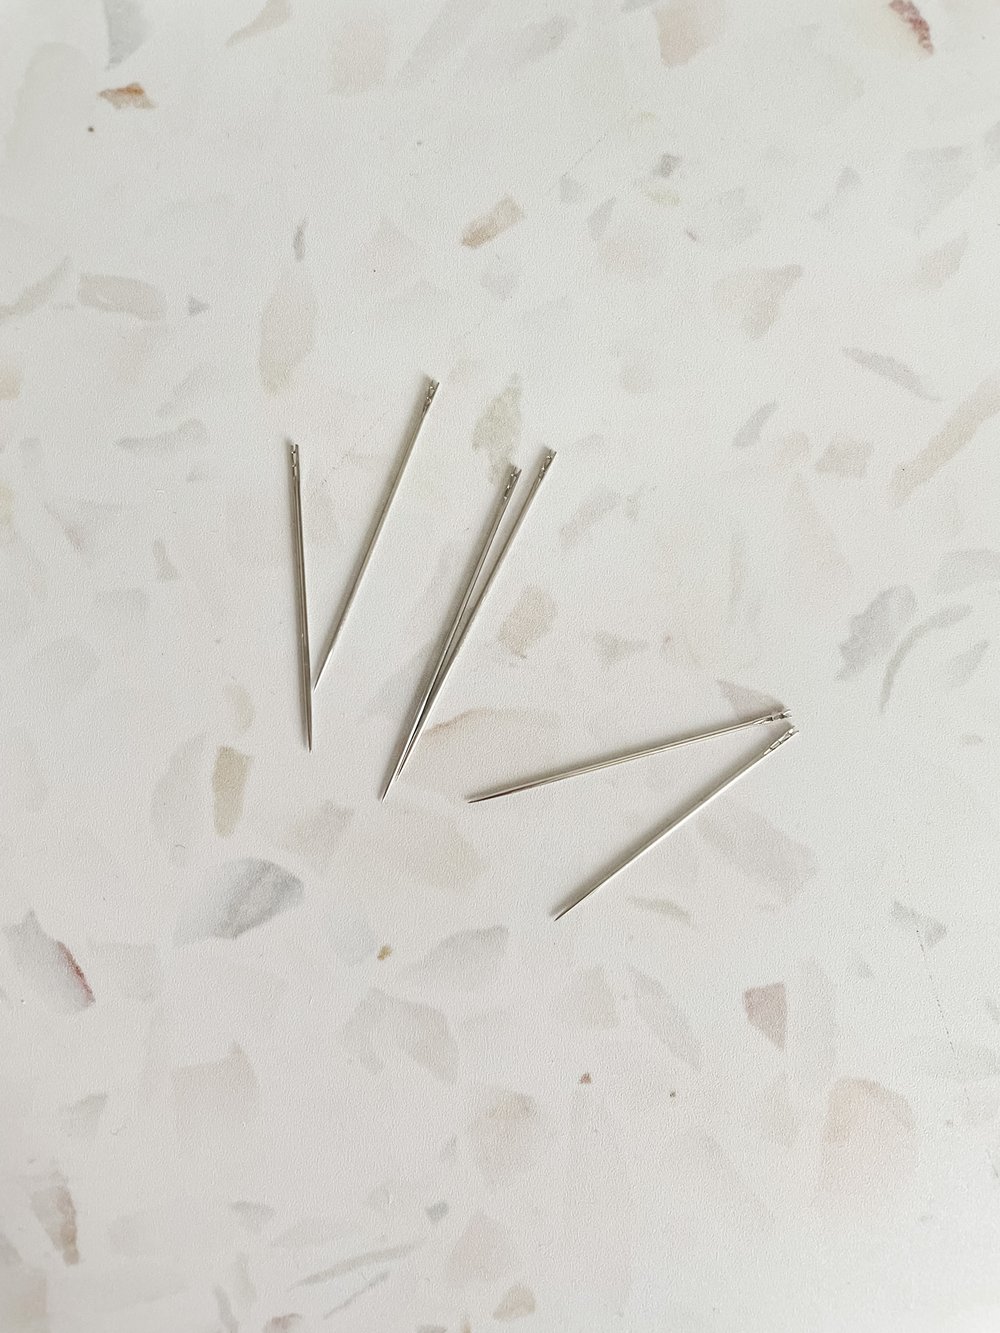 Bohin Self-Threading Needles — Material Goods